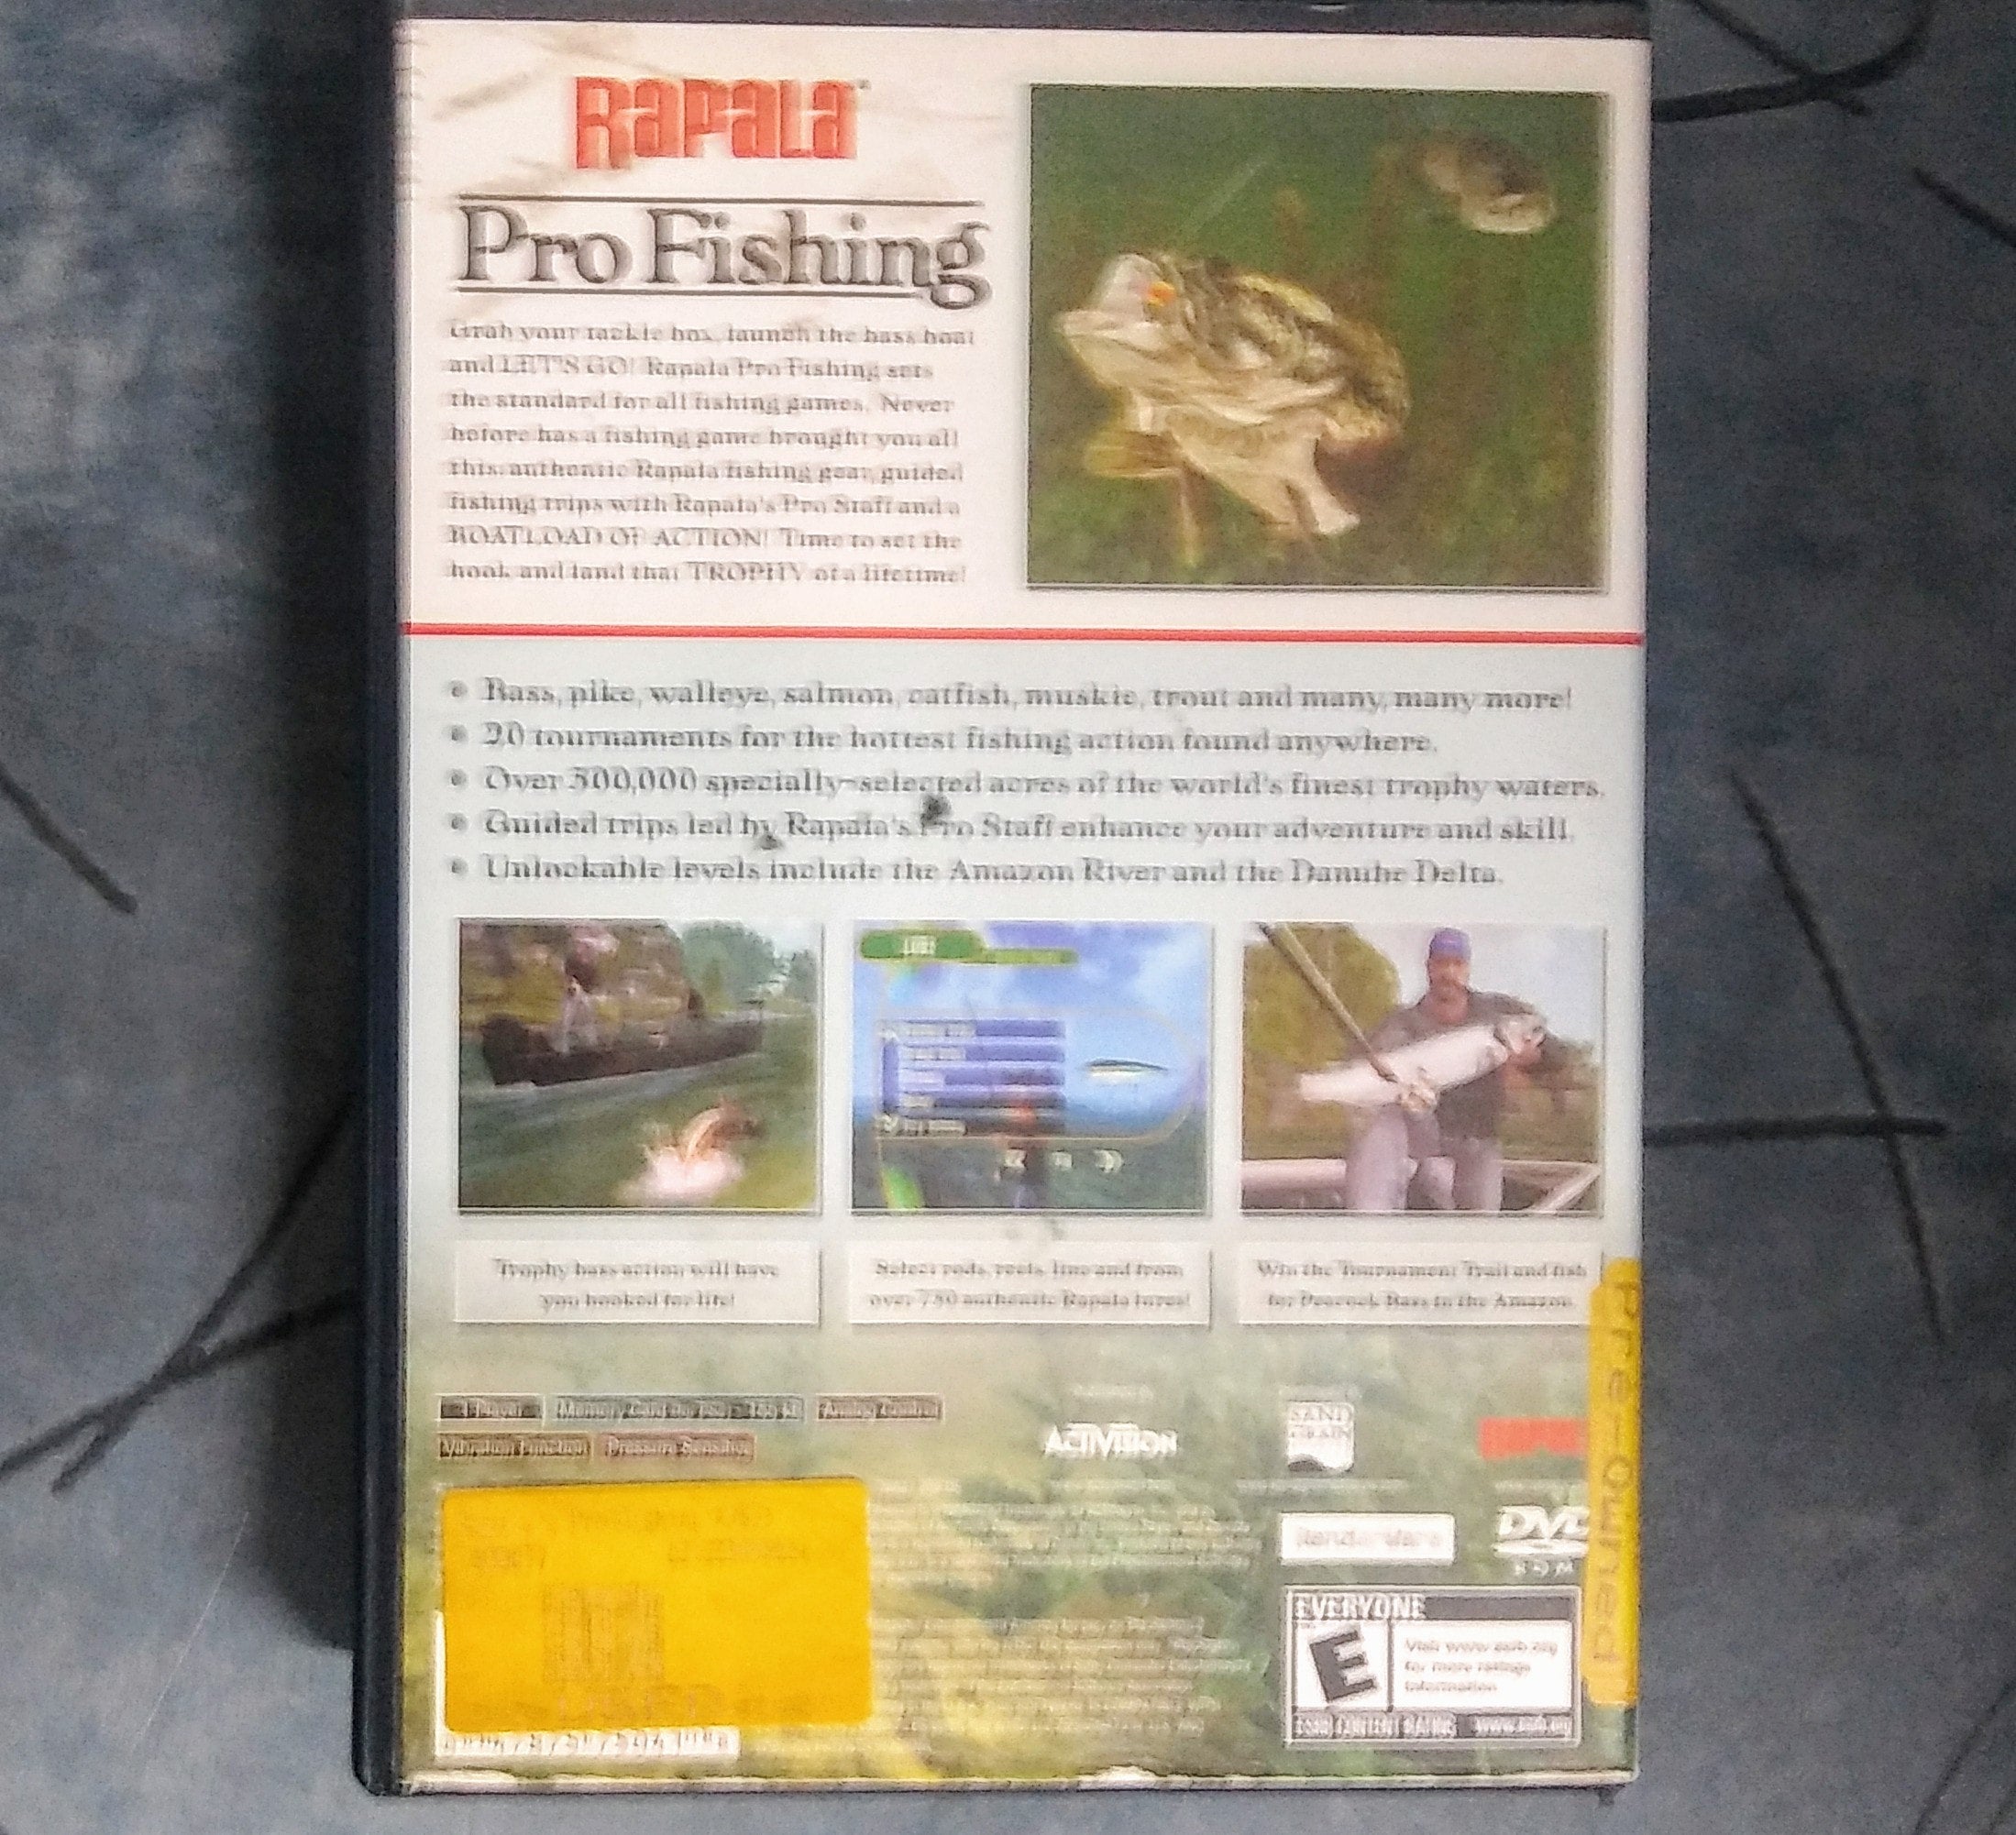 Rapala Pro Fishing - PS2